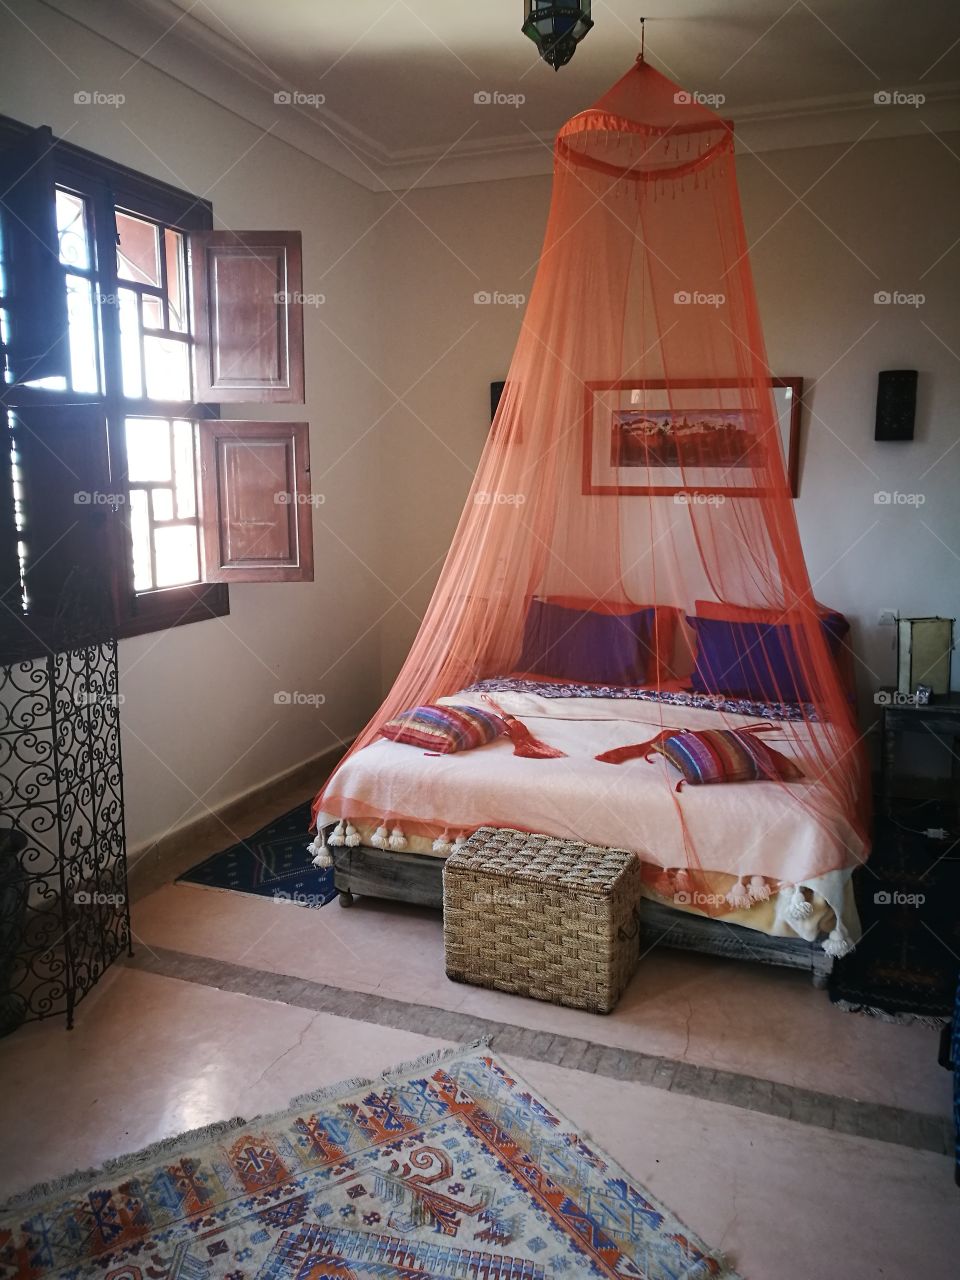 Room in Morocco